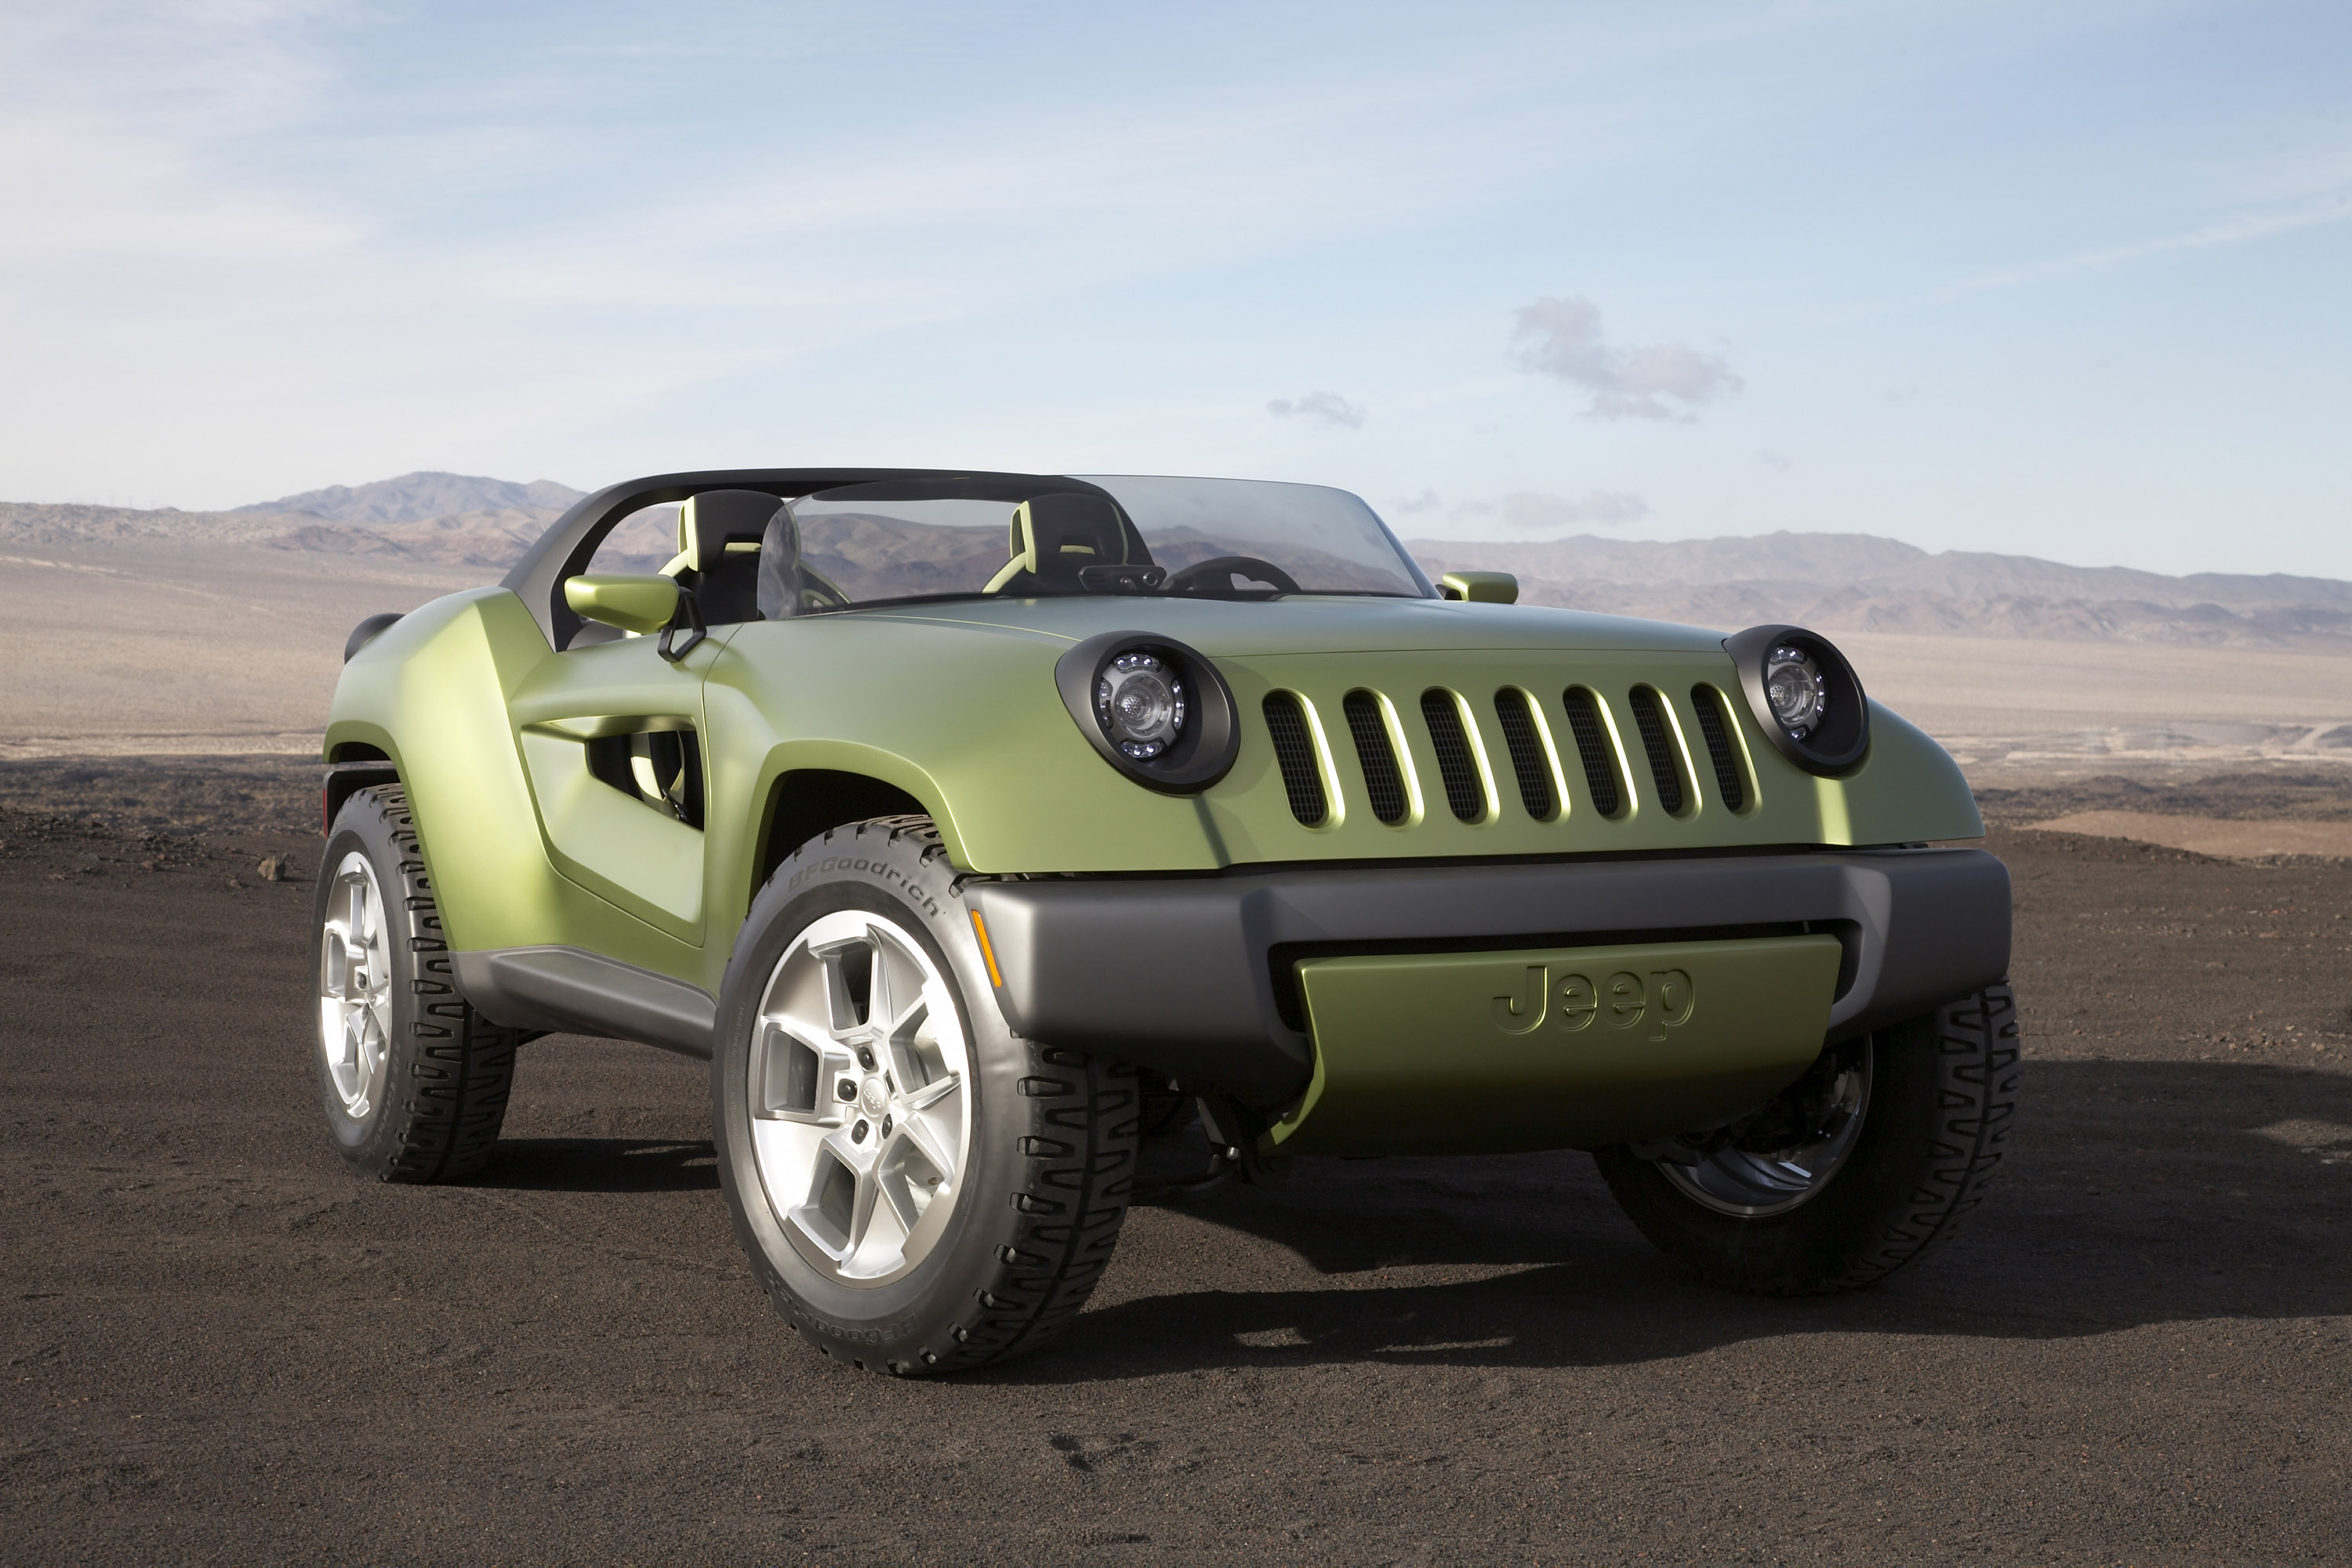 Jeep part. Jeep Renegade Concept. Jeep Renegade 2008. Джип Вранглер Ренегат. Джип Вранглер концепт.